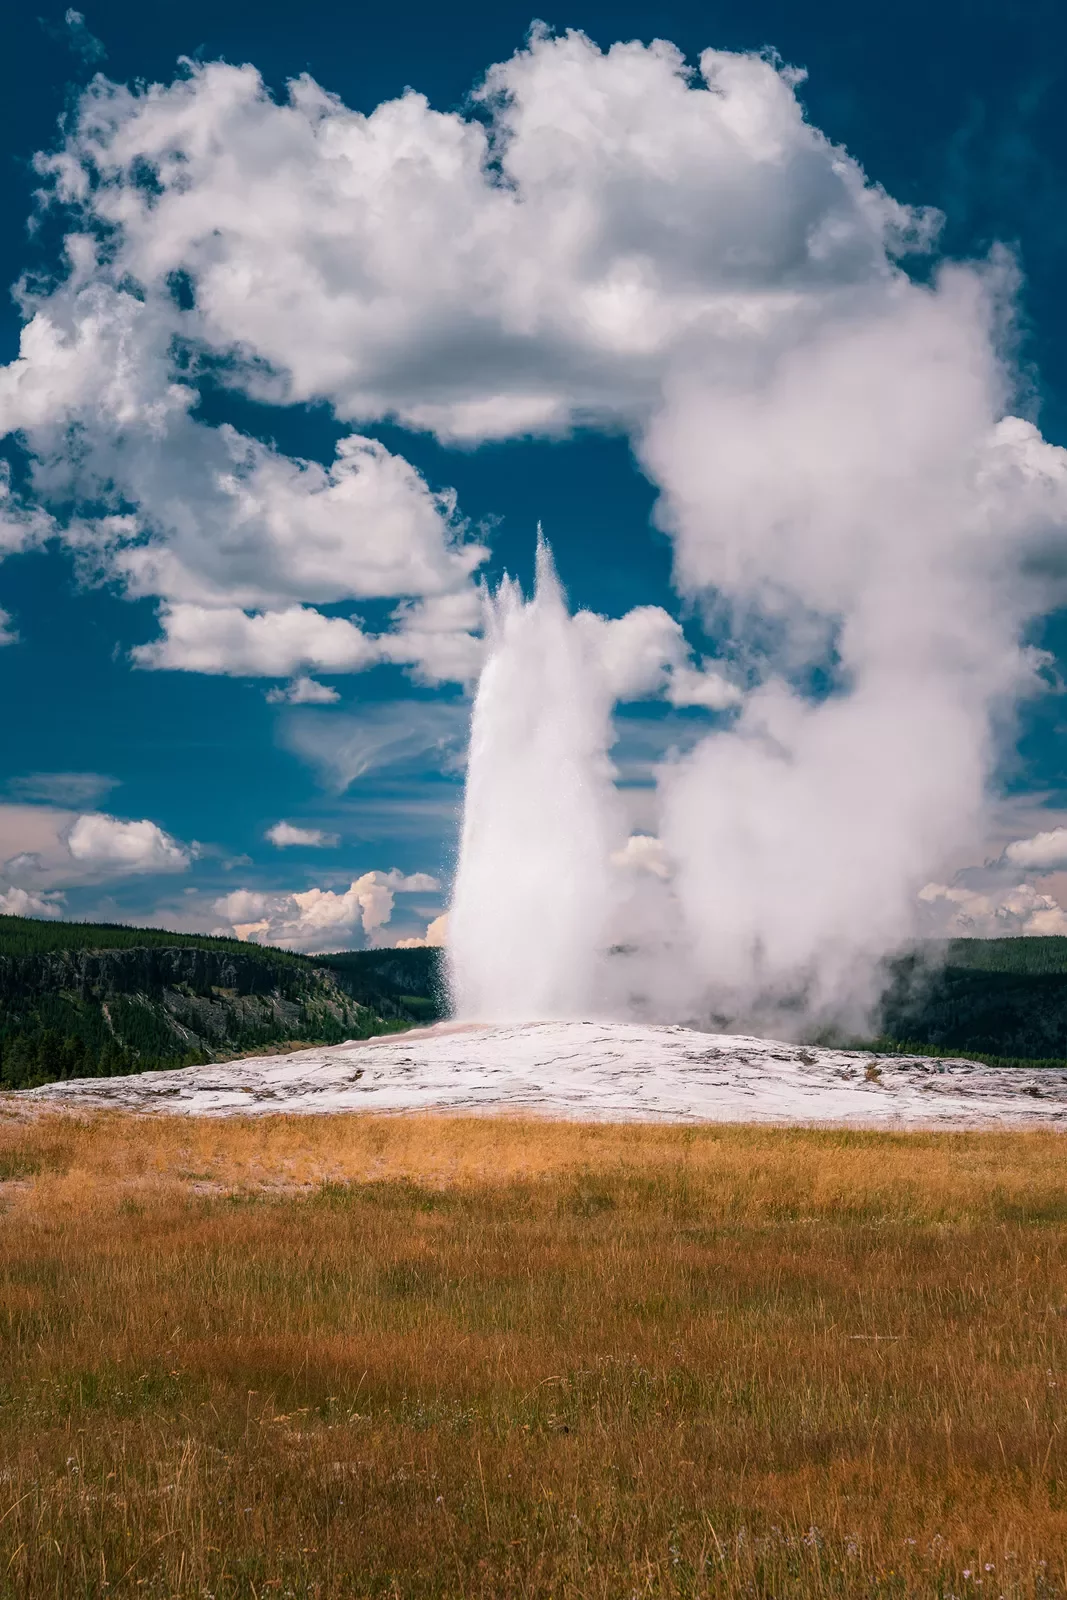 A geyser exploding